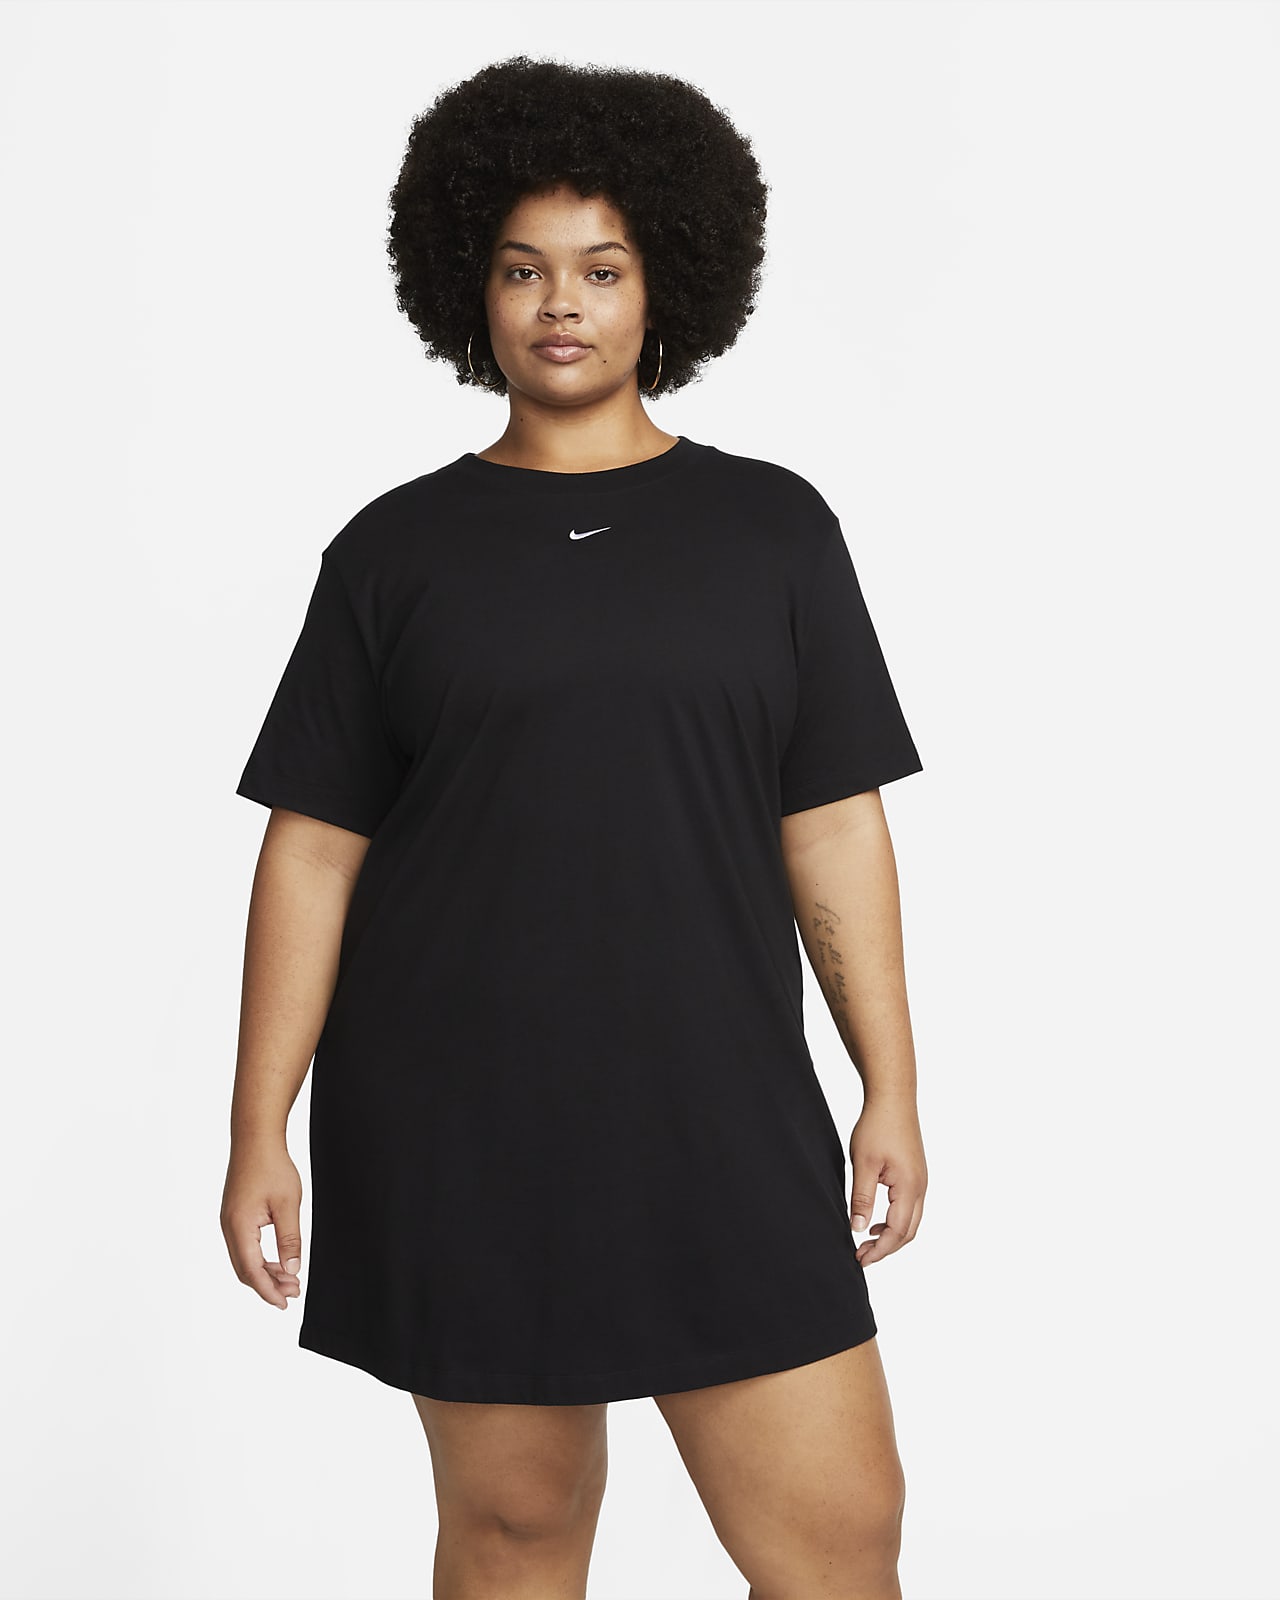 Vestido tipo playera de manga corta para mujer (talla grande) Nike Sportswear Essential